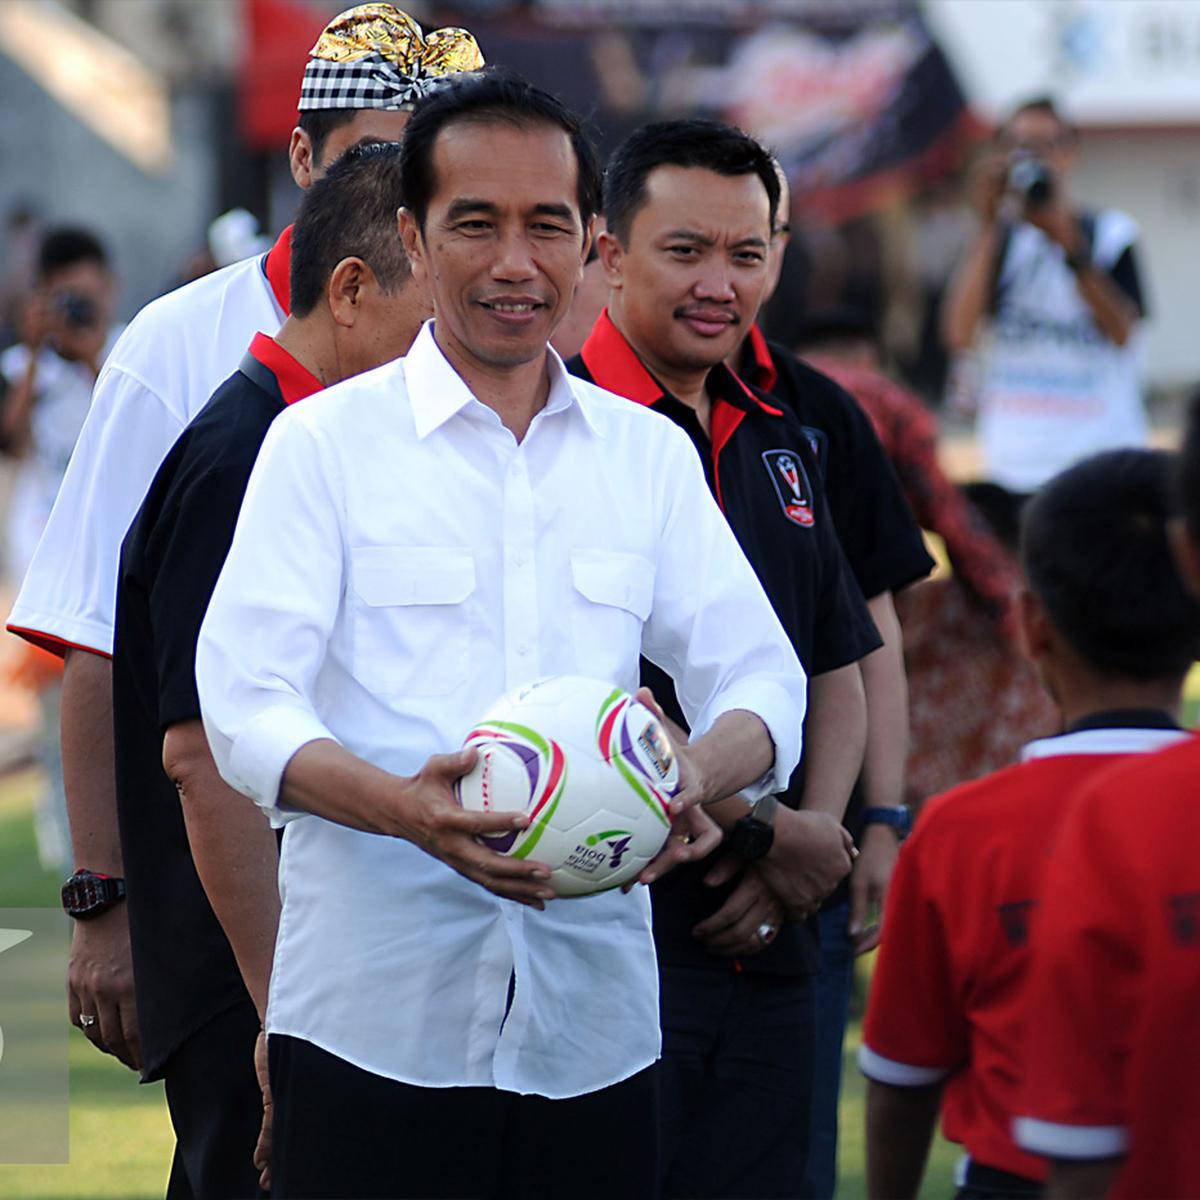 Jokowi Minta Urusan Olahraga dan Politik Jangan Dicampuradukkan